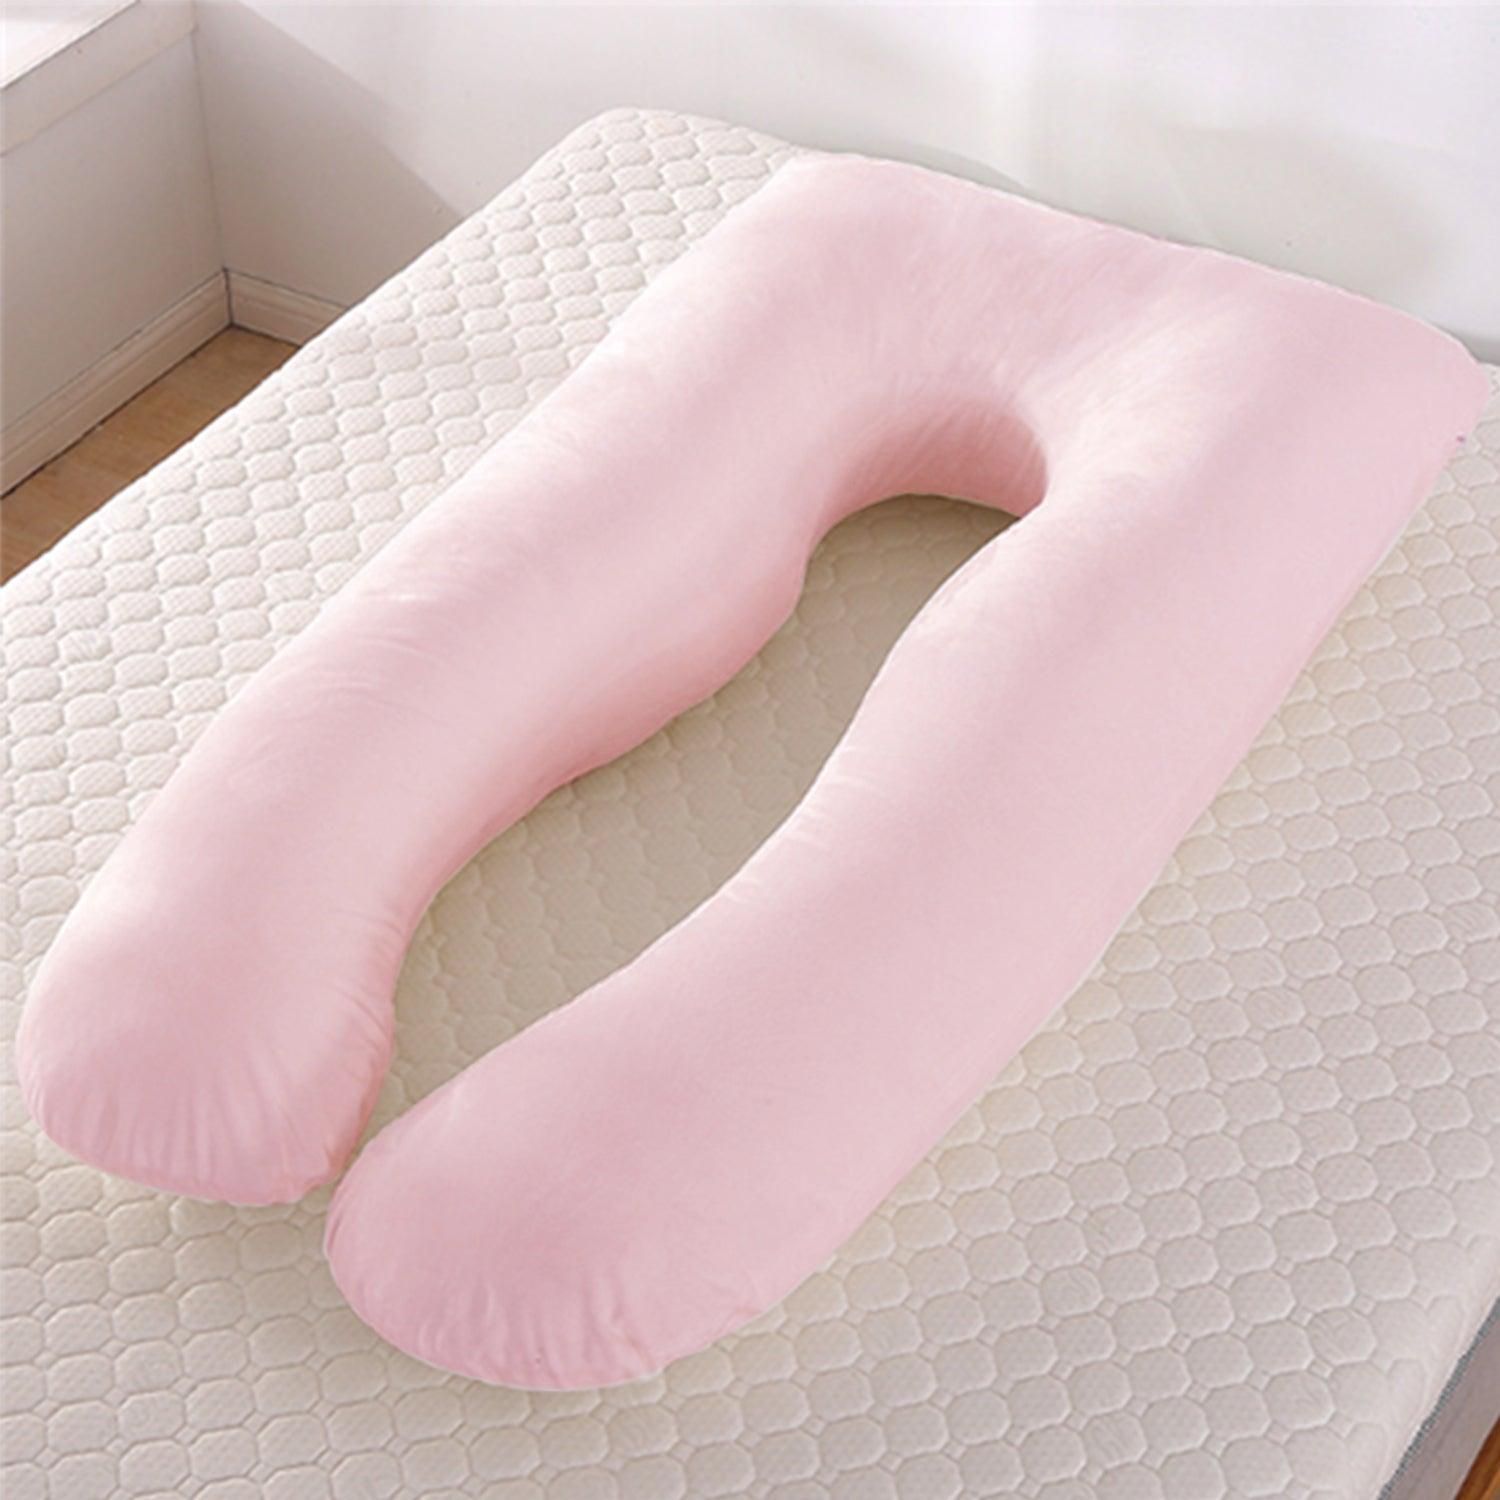 Sleeping Support Pillow For Pregnant Women U Shape - Silvis21 ™